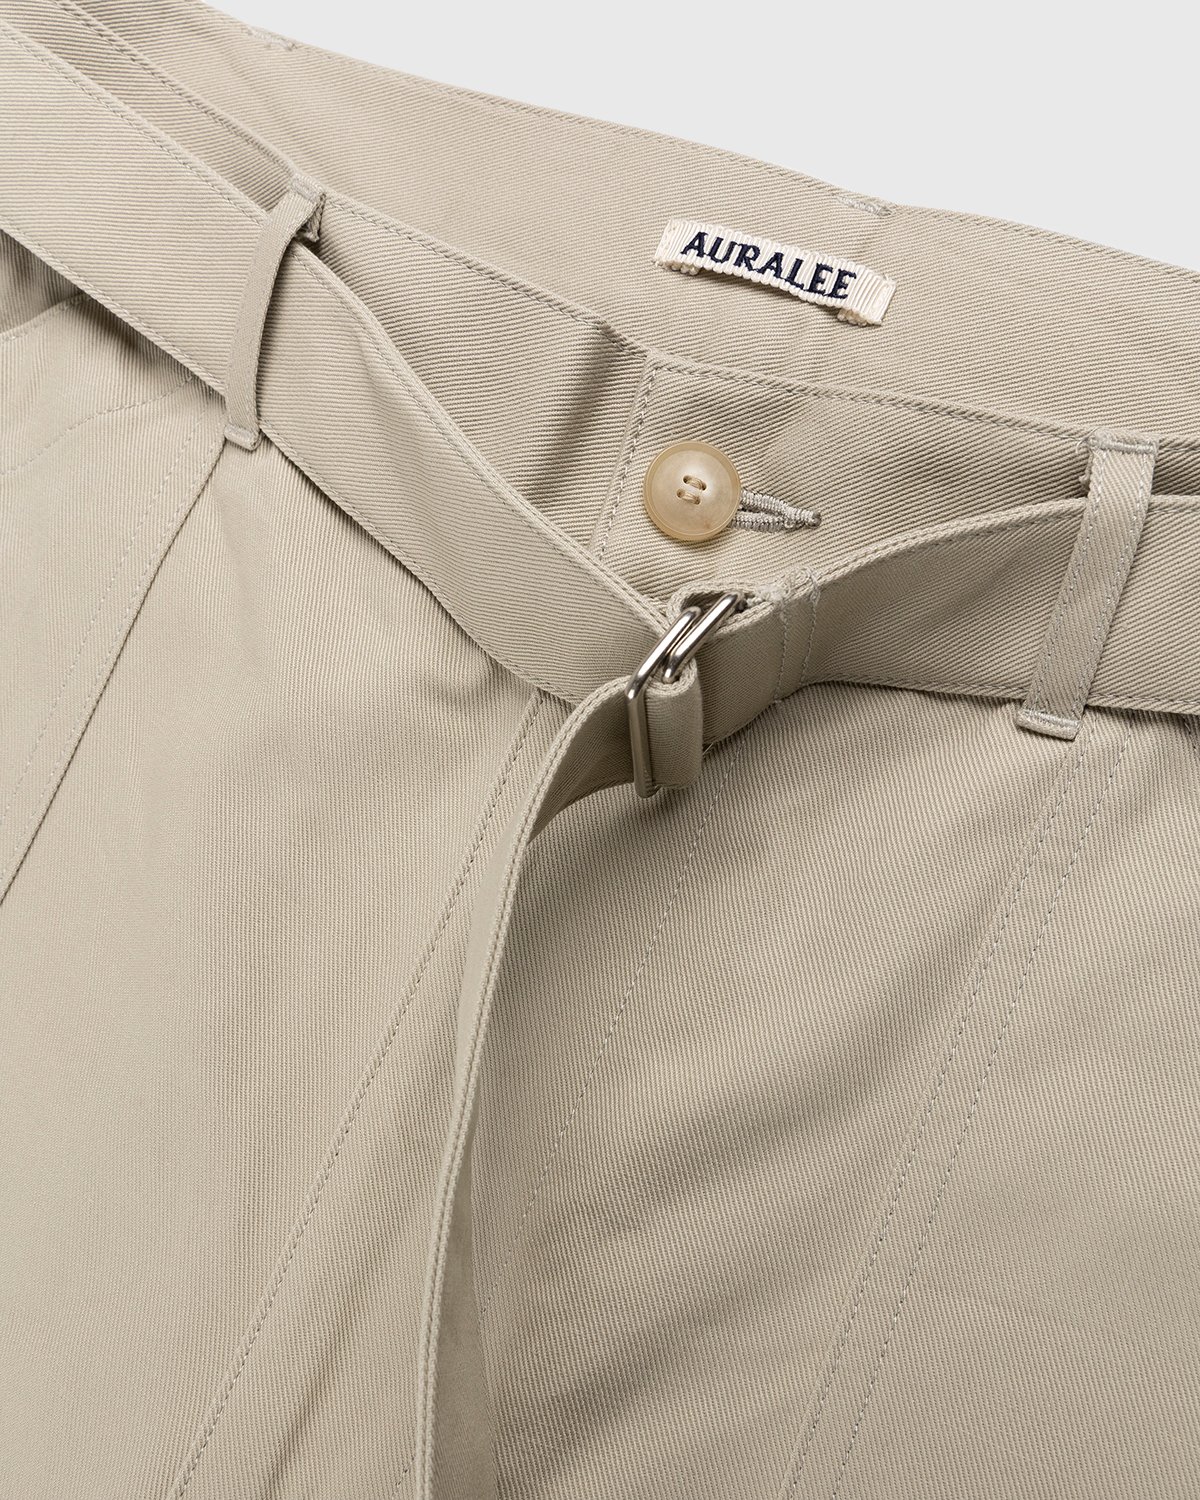 Auralee - Cotton Woven Pants Khaki - Clothing - Multi - Image 4